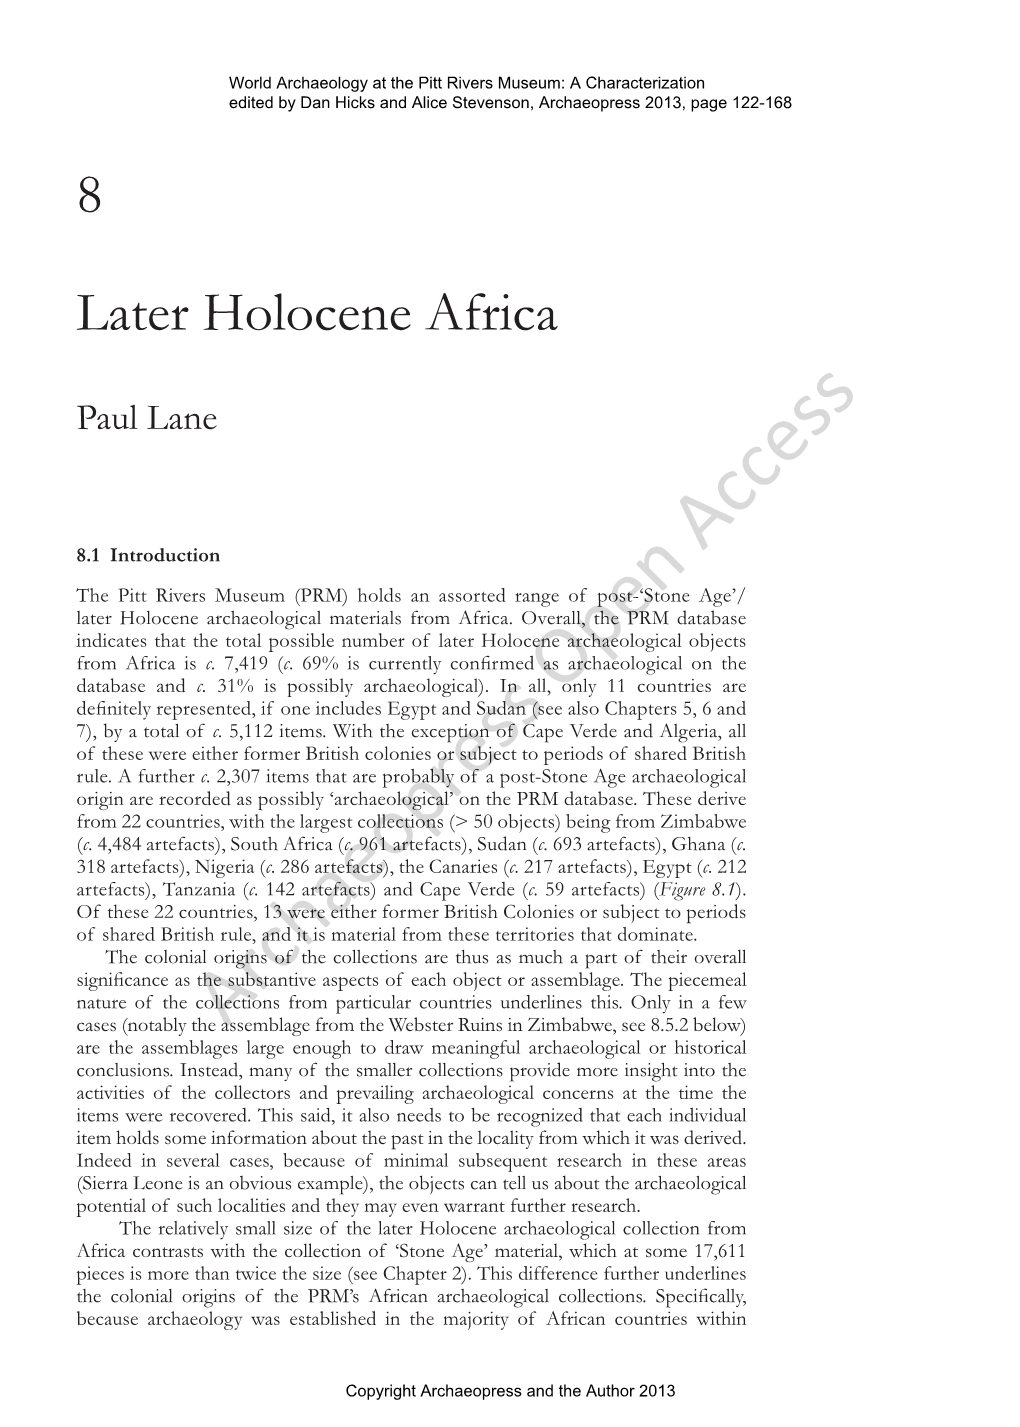 Later Holocene Africa